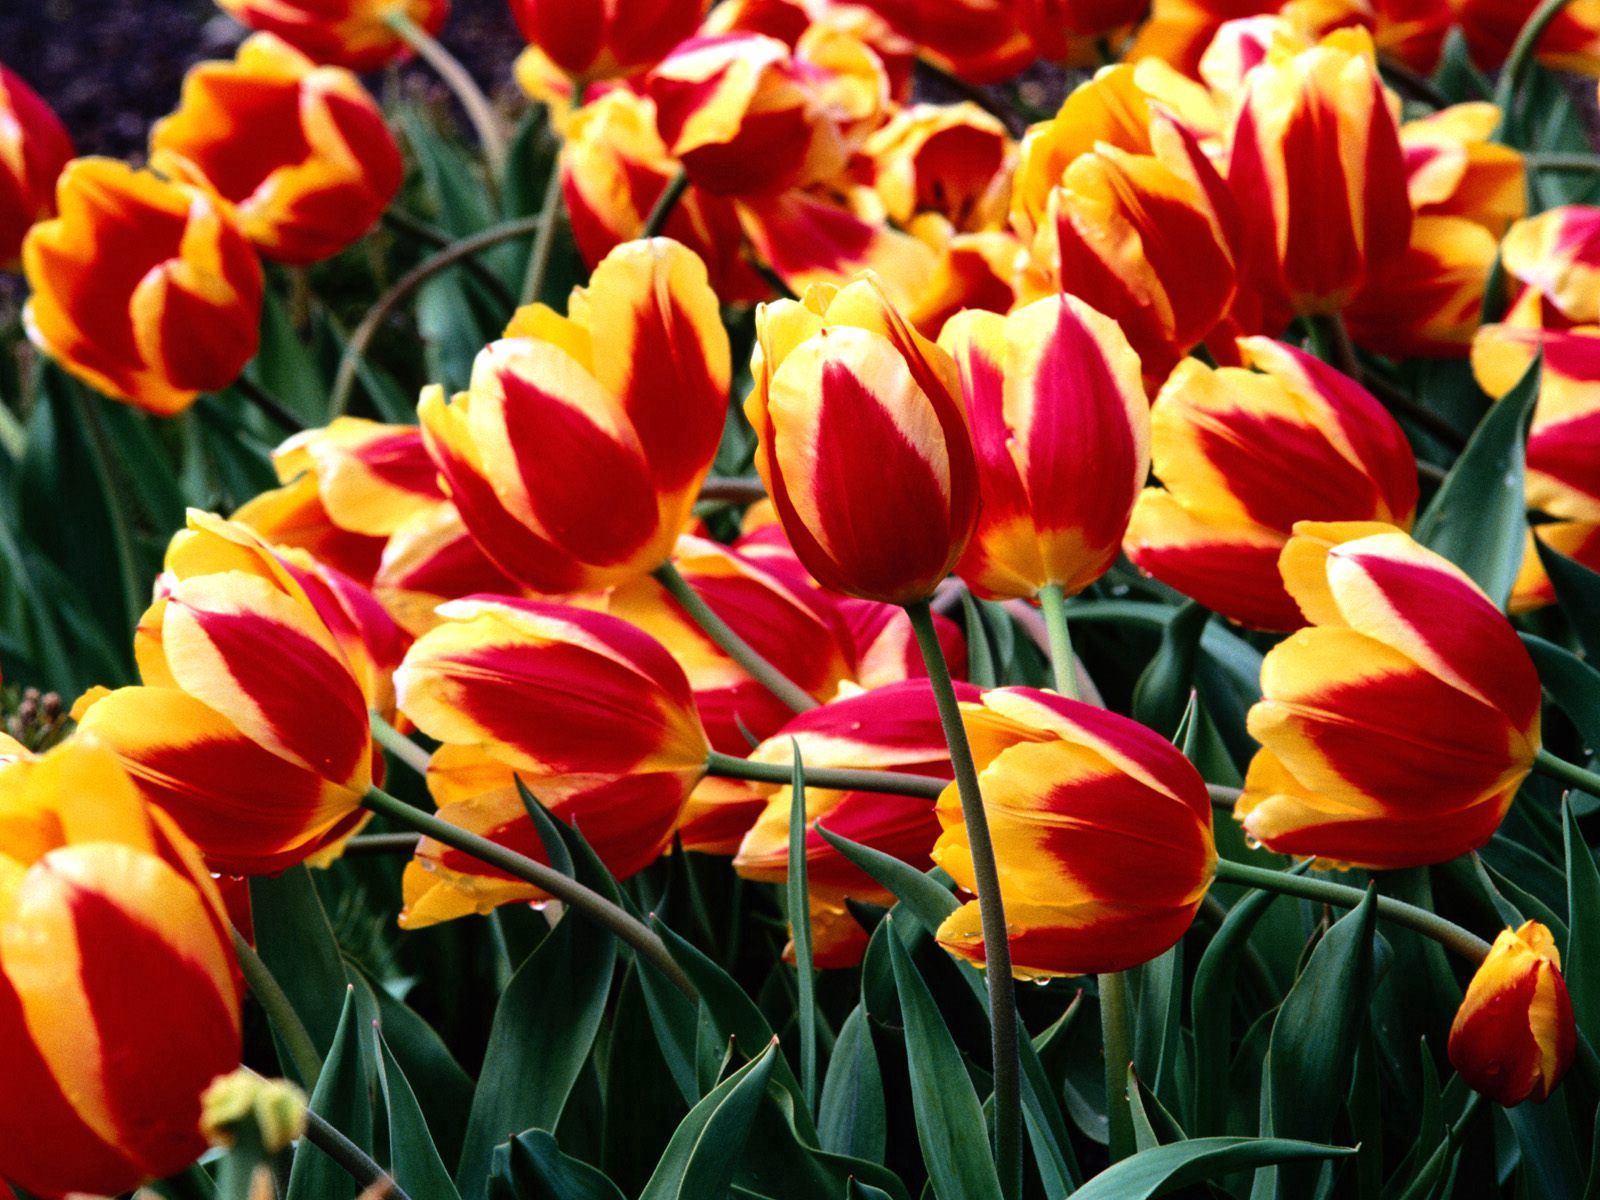 145264 descargar imagen flores, tulipanes, verduras, drops, cama de flores, parterre, frescura, jaspeado, moteado: fondos de pantalla y protectores de pantalla gratis